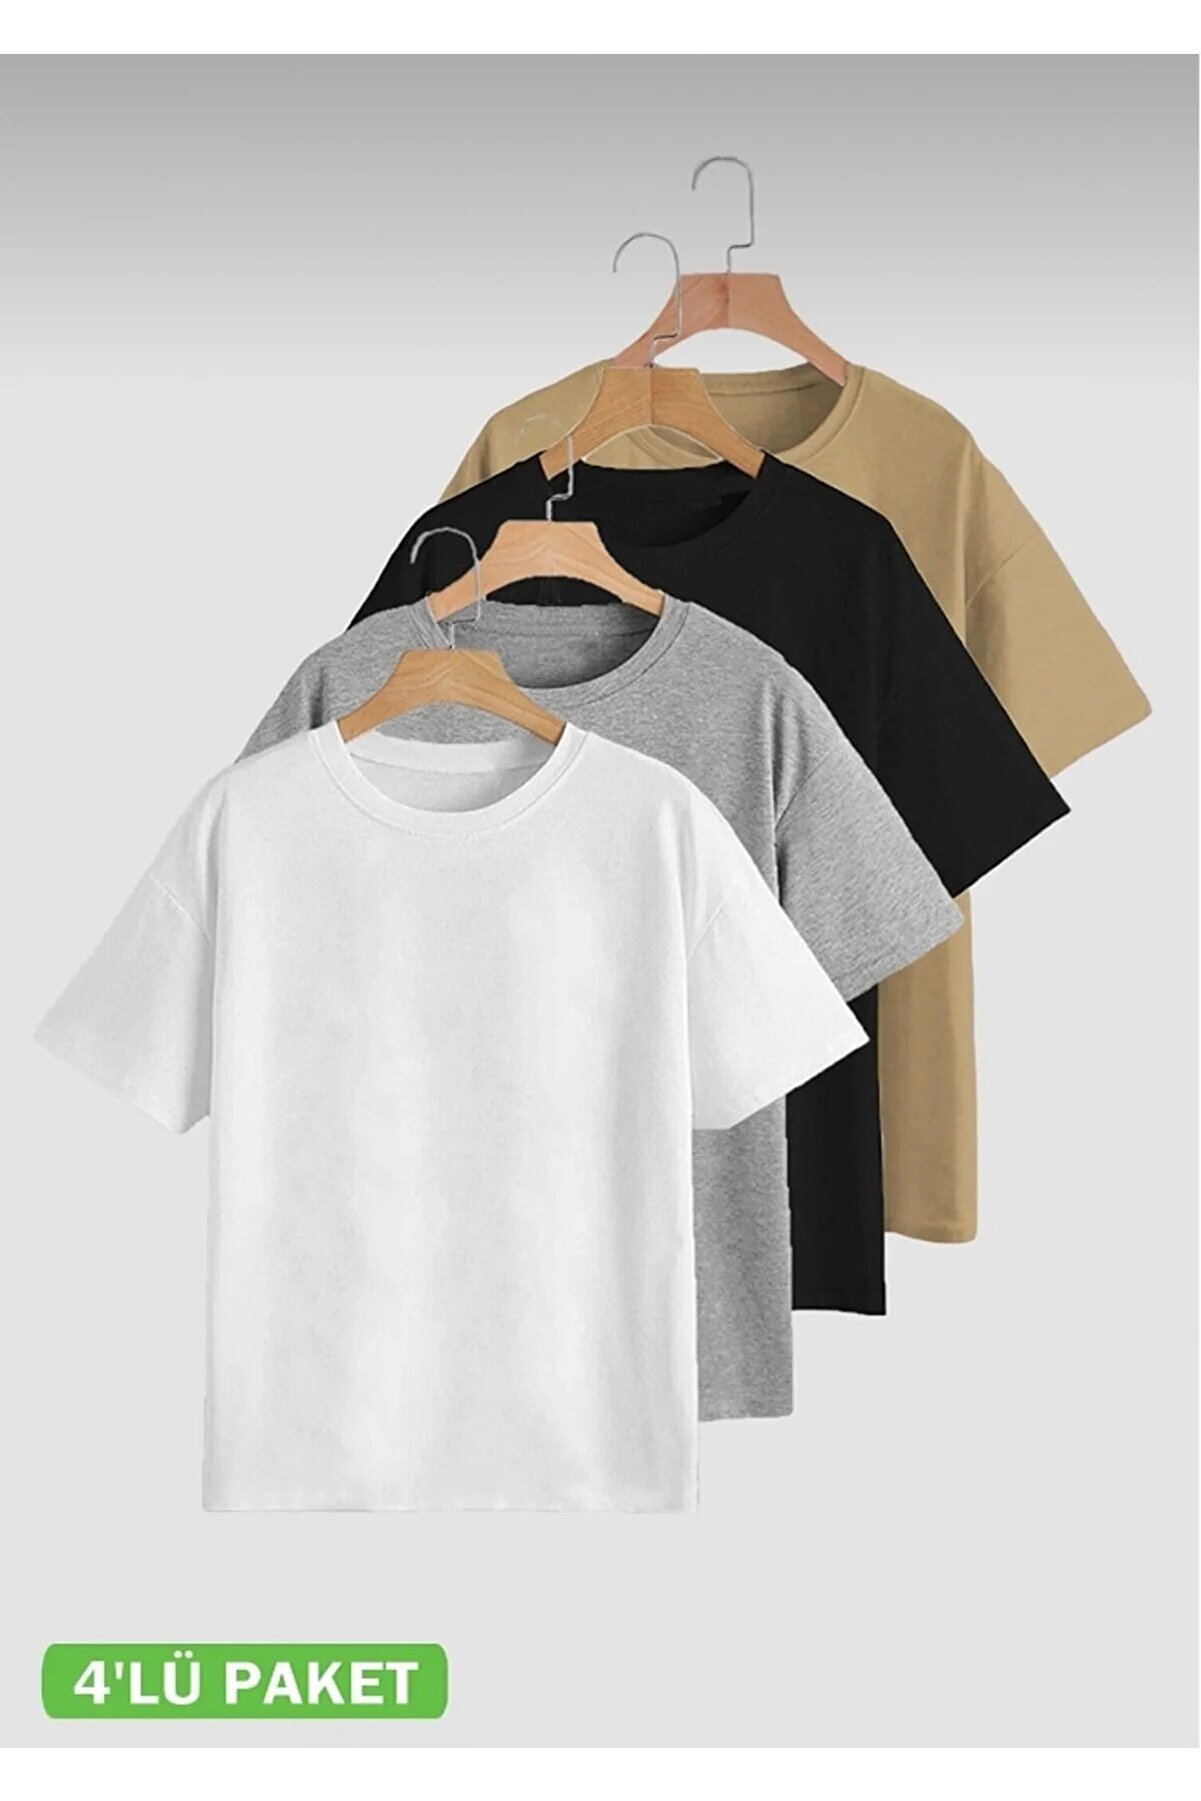 Genel Markalar Unisex 4’lü Hazır Paket Siyah - Gri - Beyaz - Kahve Slimfitt T-shirt